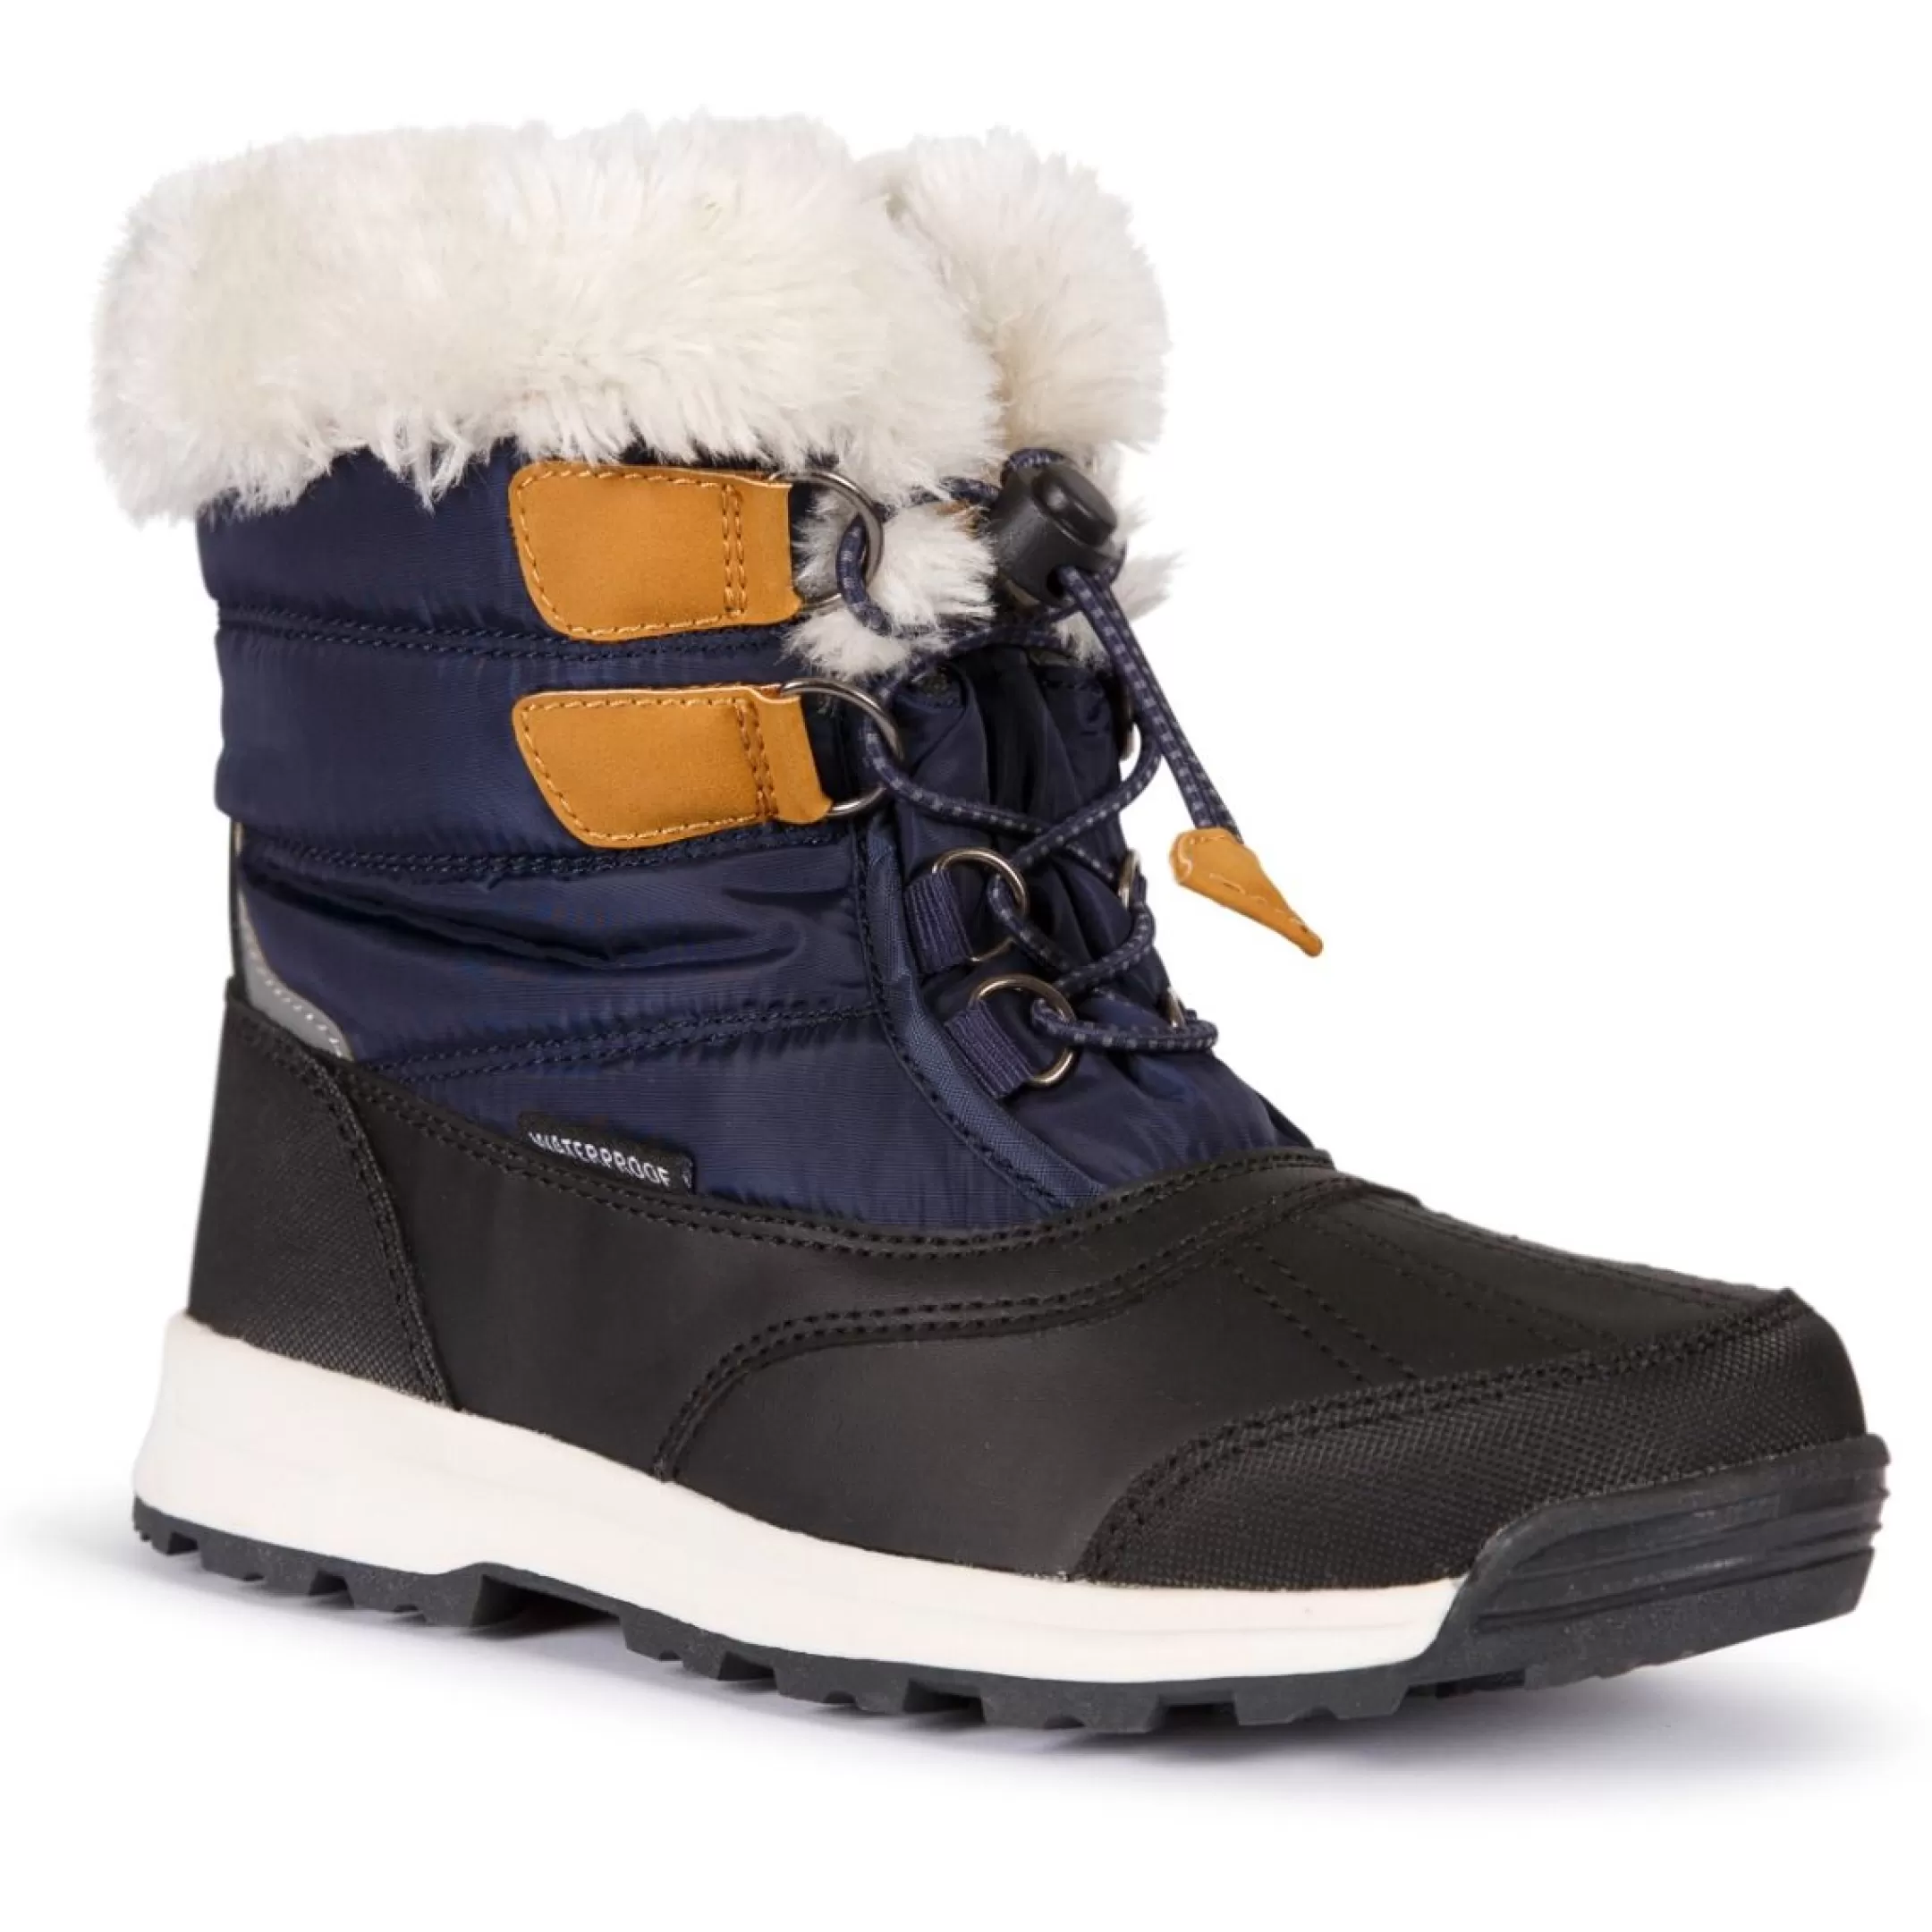 Youth Waterproof Snow Boots Ratho | Trespass Shop